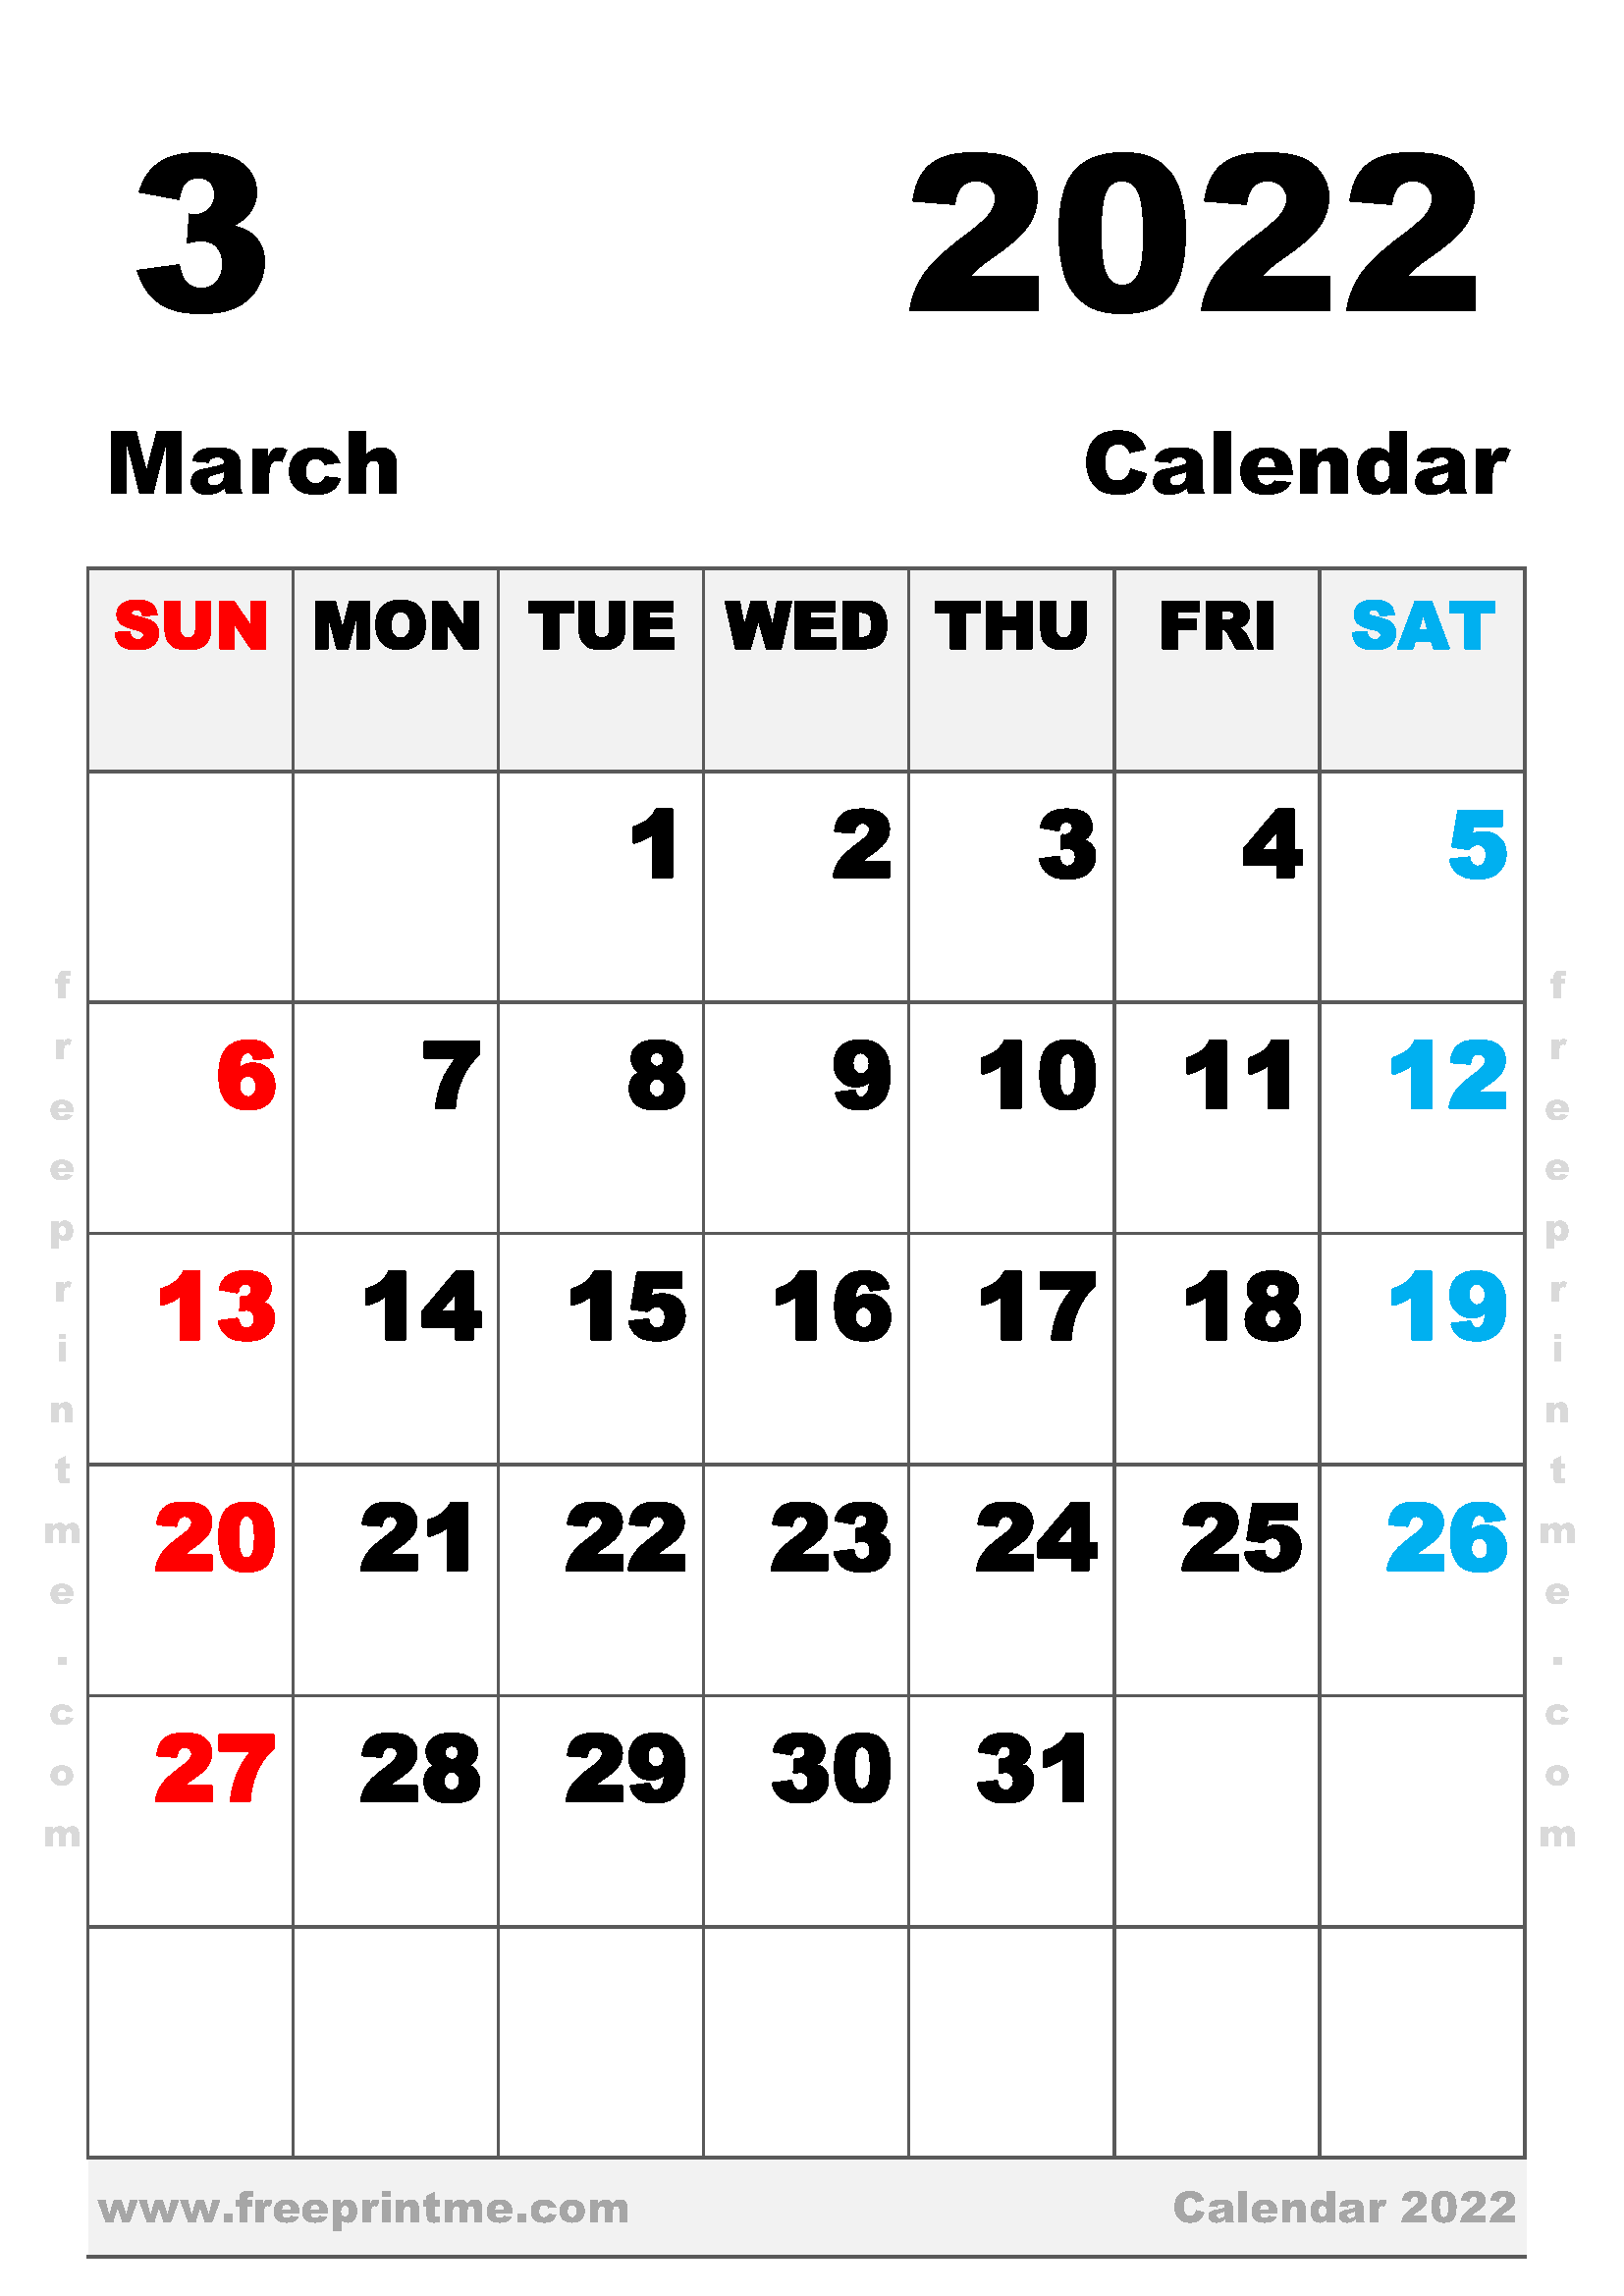 Mar Calendar 2022 Free Printable March 2022 Calendar A4